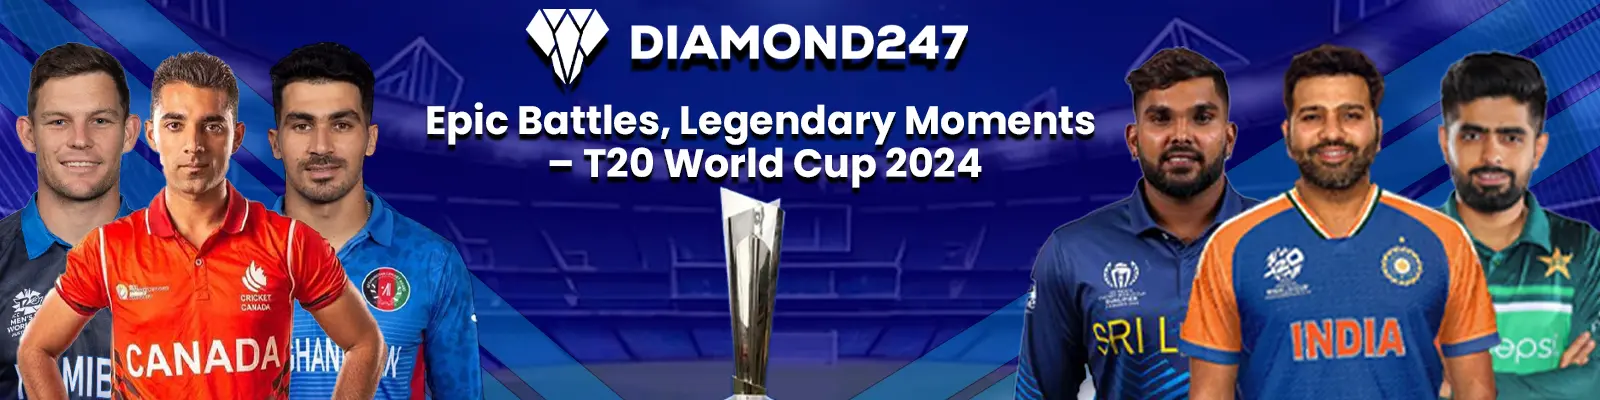 t20 worldcup 2024 diamond247